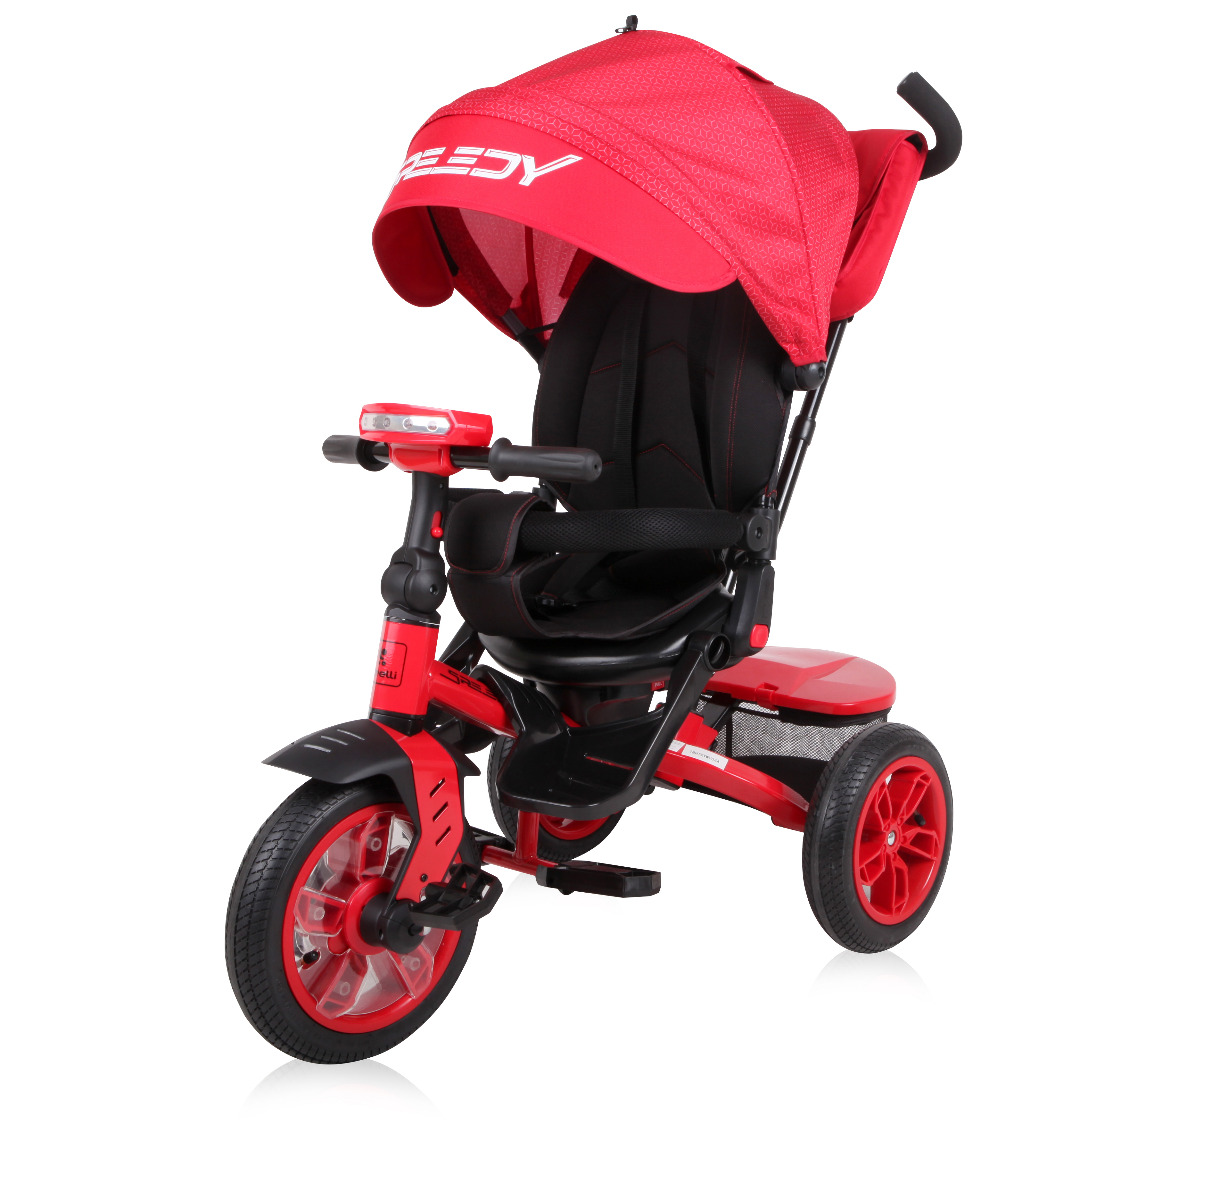 Tricicleta multifunctionala 4in1, Speedy, roti cu camera, scaun rotativ, Red & Black